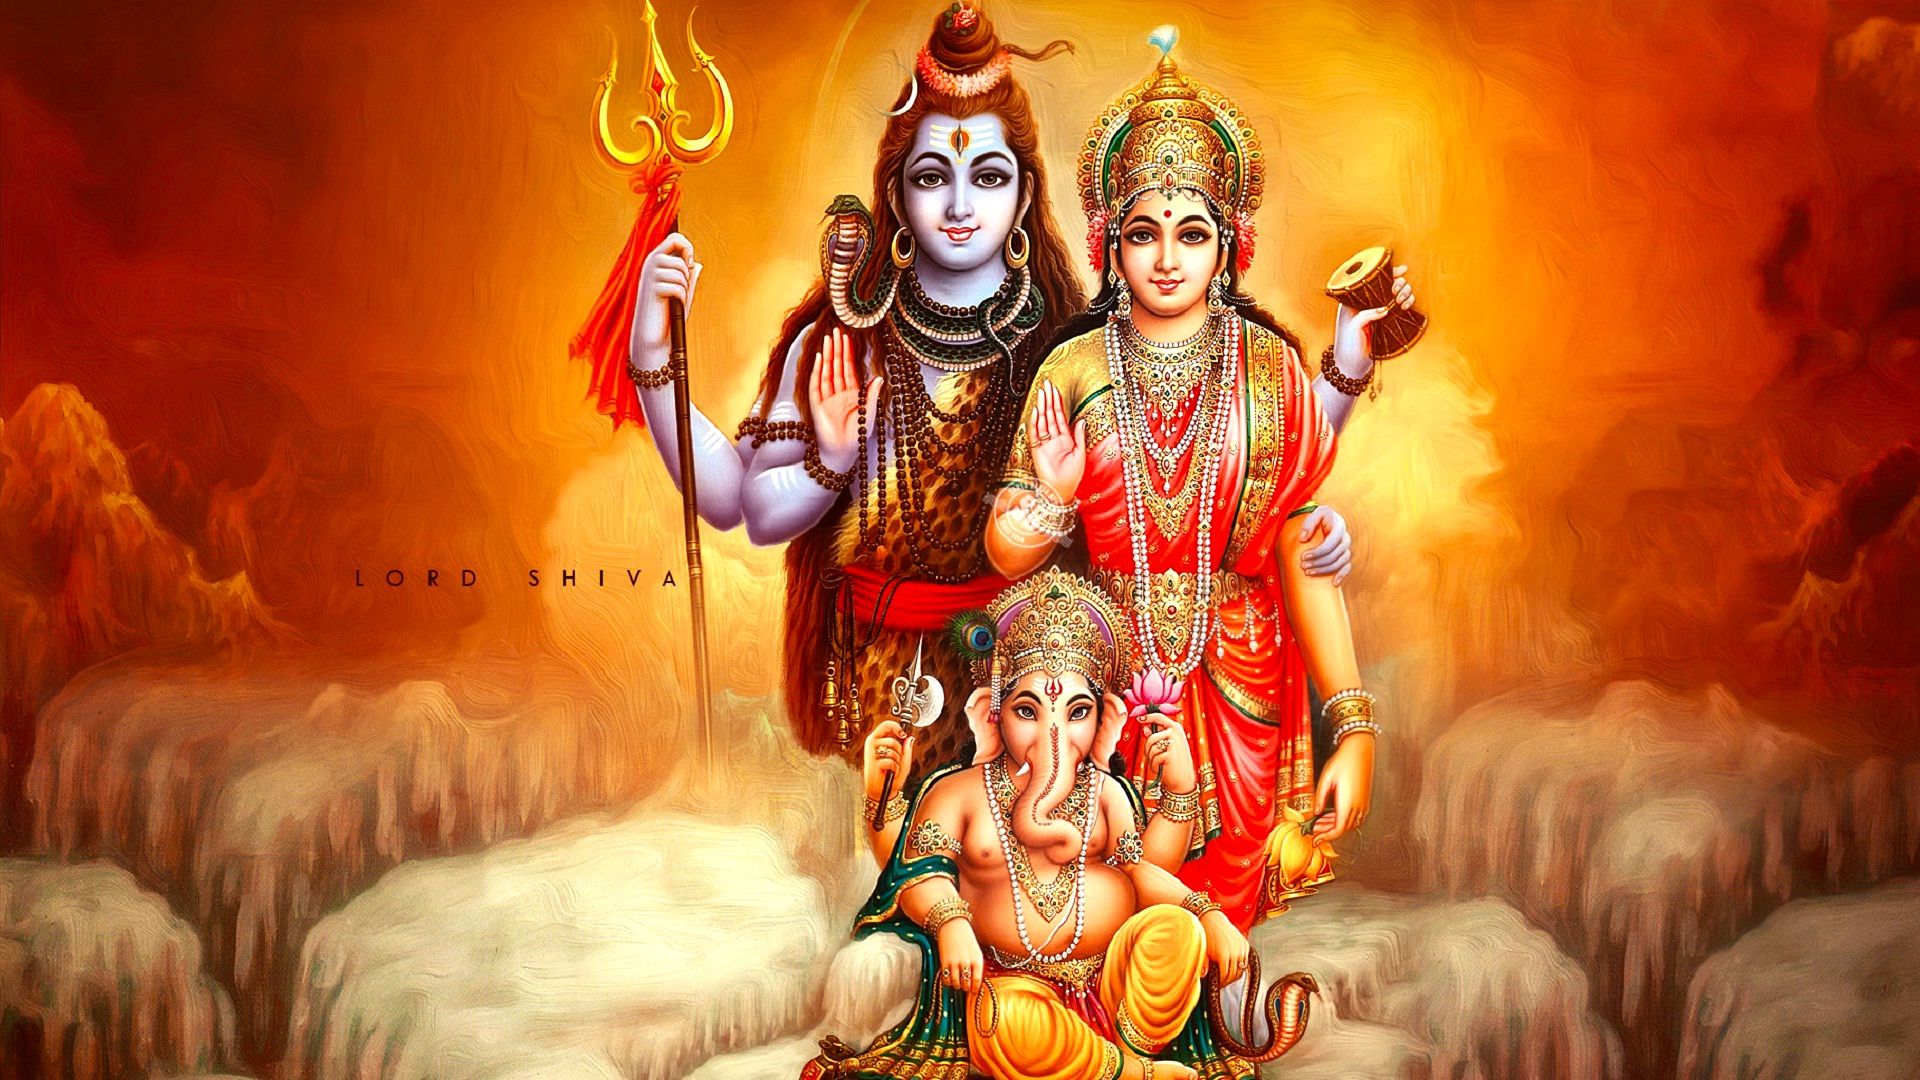 Shiva God hd image